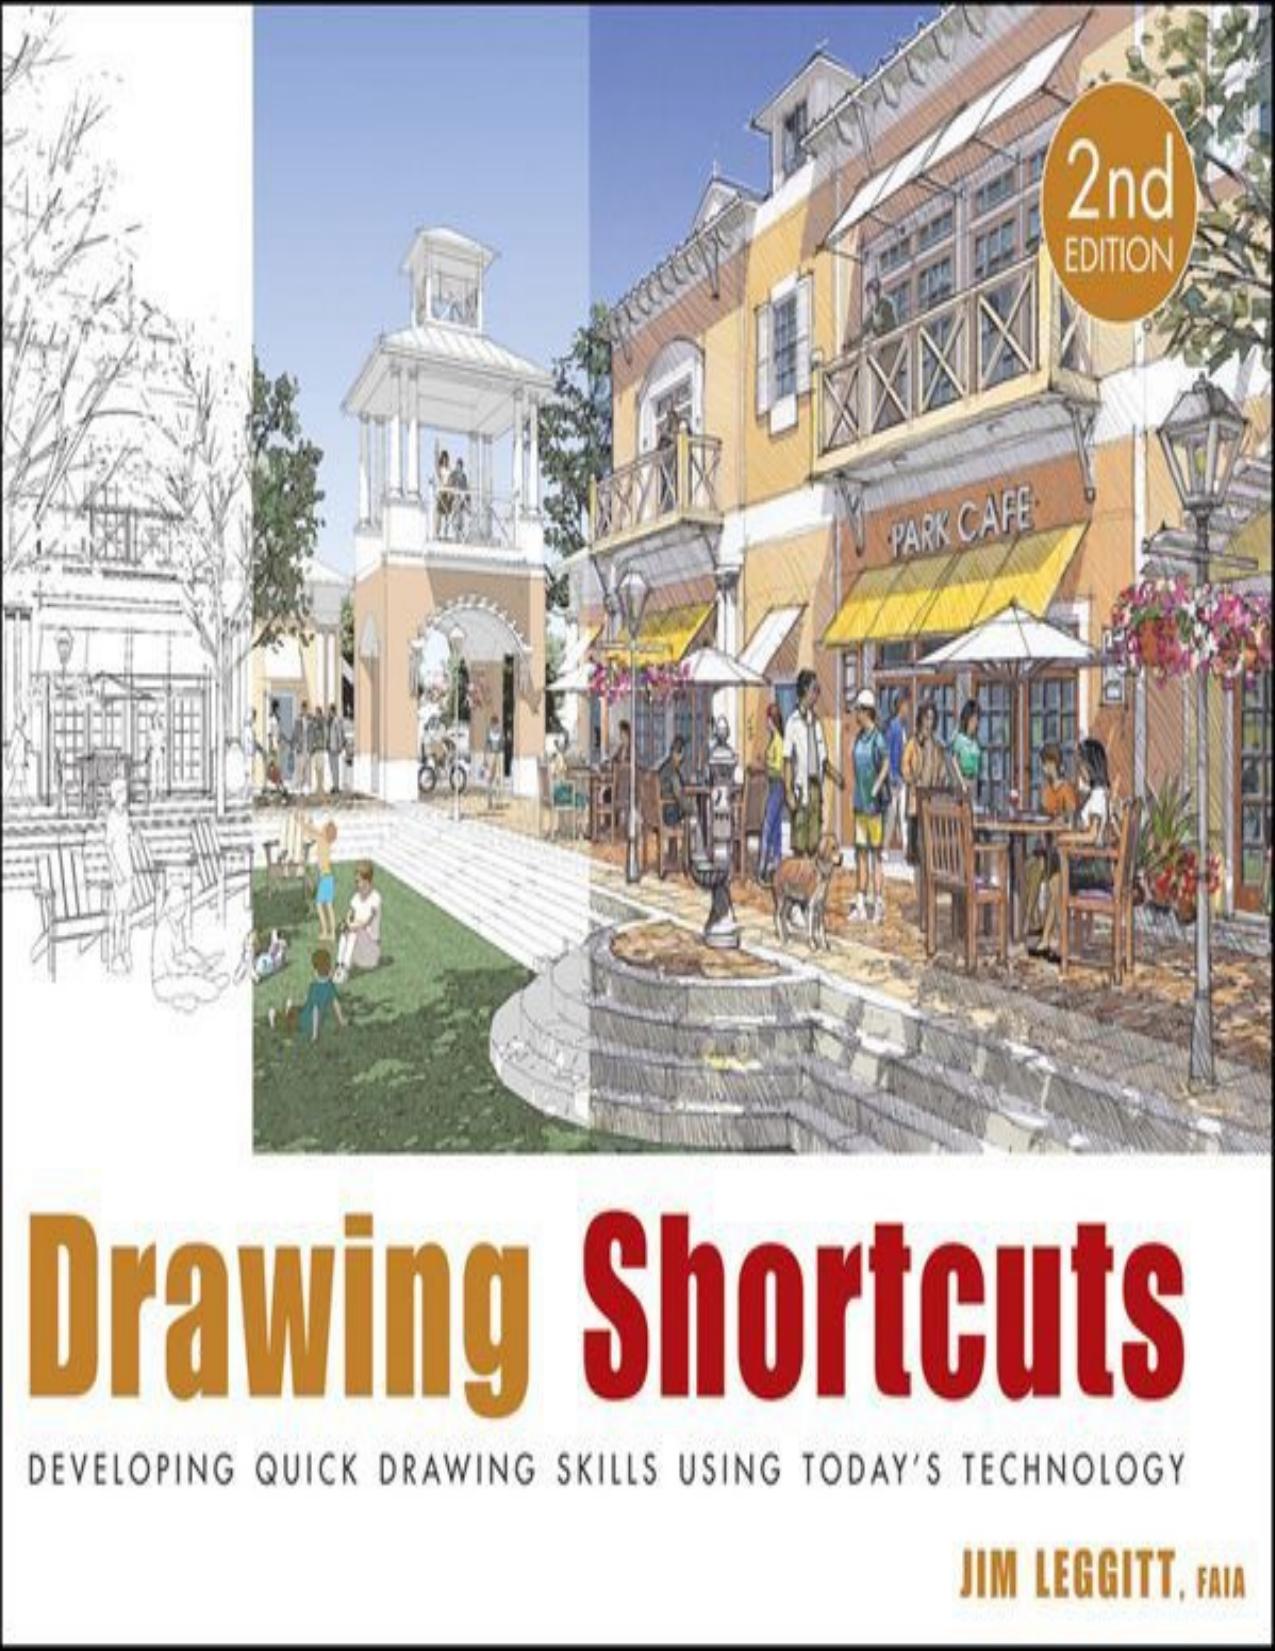 Drawing Shortcuts: Developing Quick Drawing Skills Using Today's Technology by Leggitt Jim